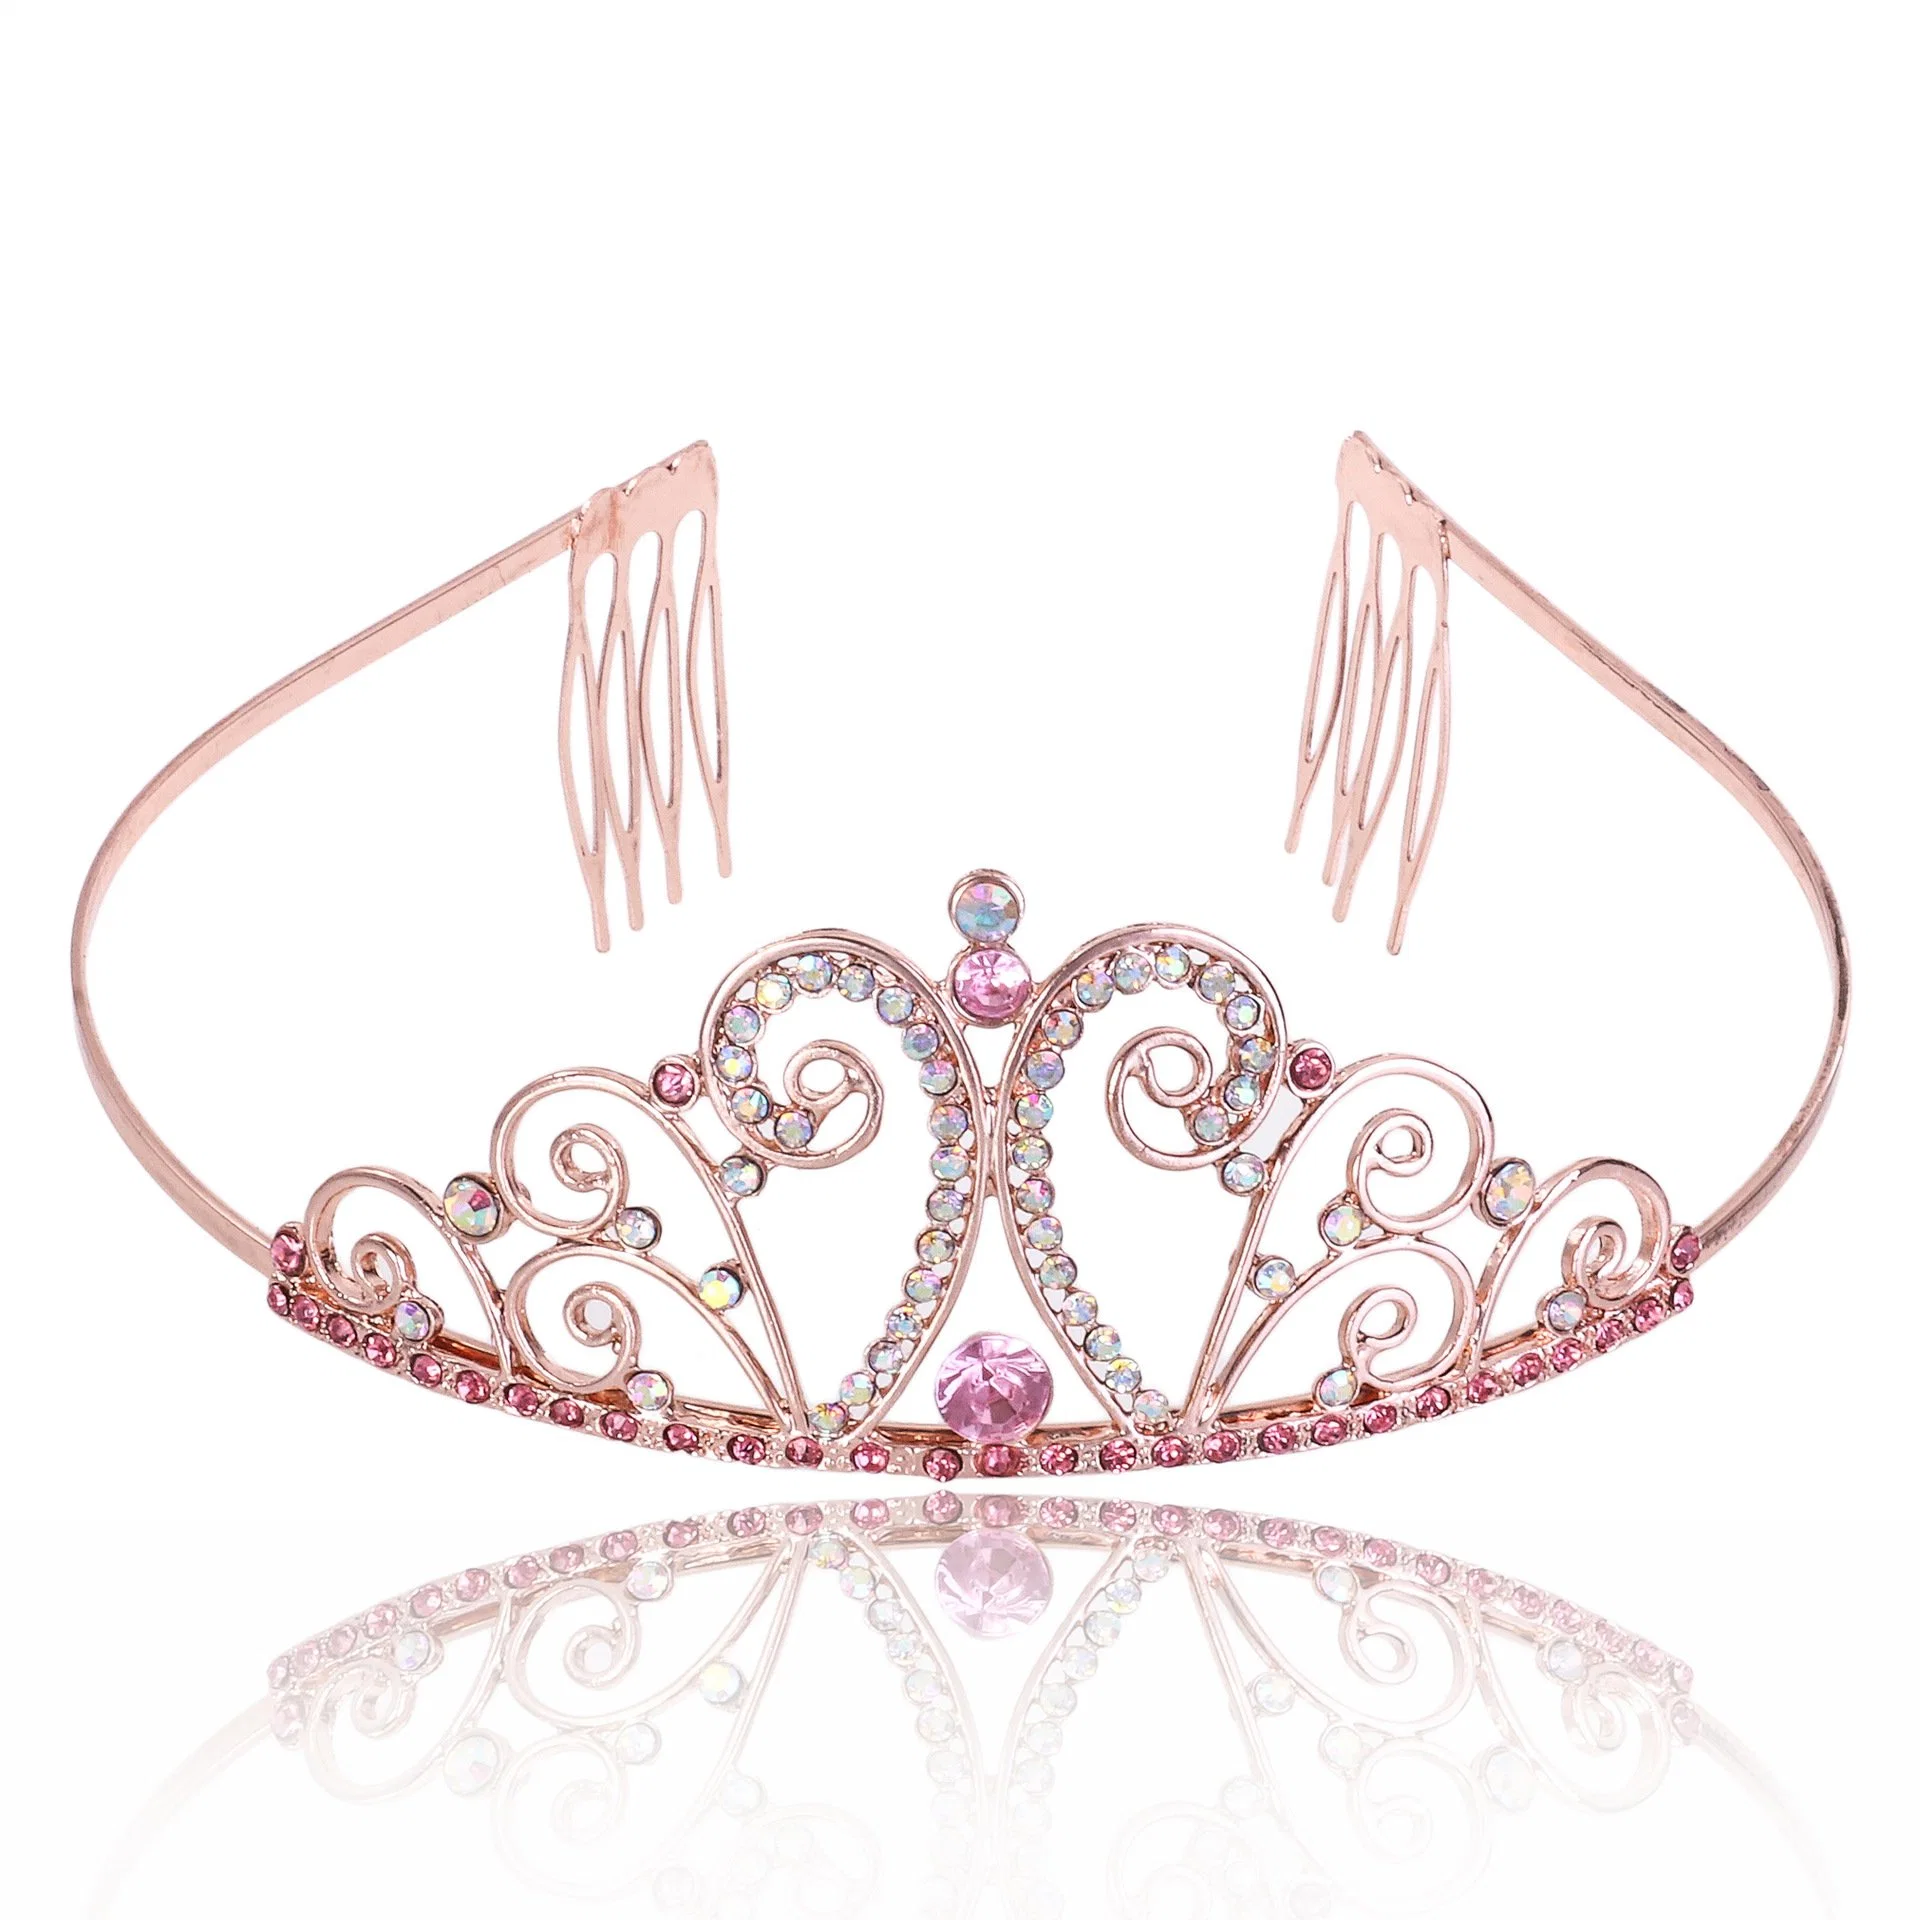 Kinder Mode Crystal Crown Stirnband Haarschmuck Kopfschmuck Party Supplies Schmuckgeschenk